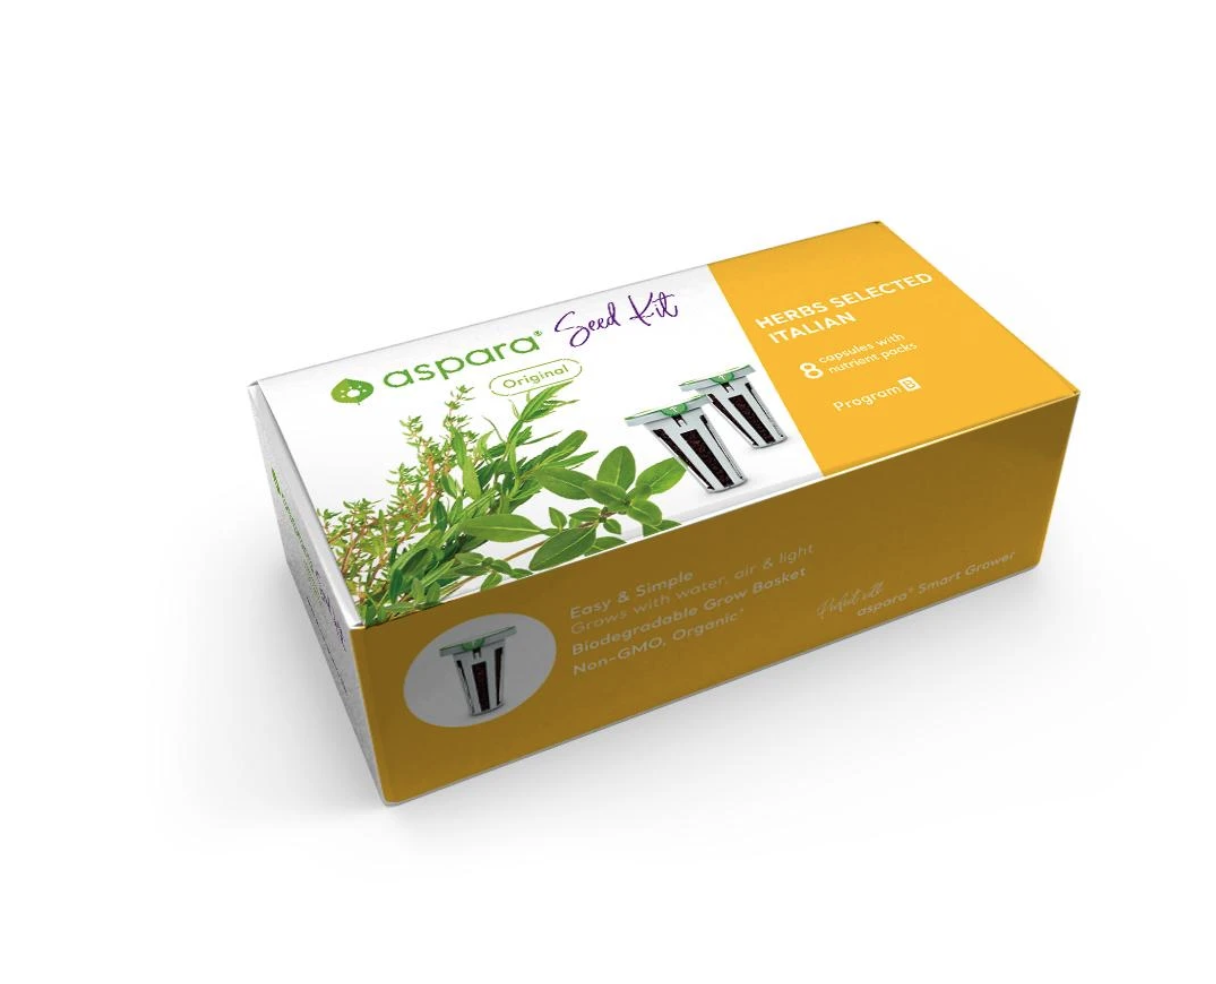 Growgreen-Herbs-selected-Italian